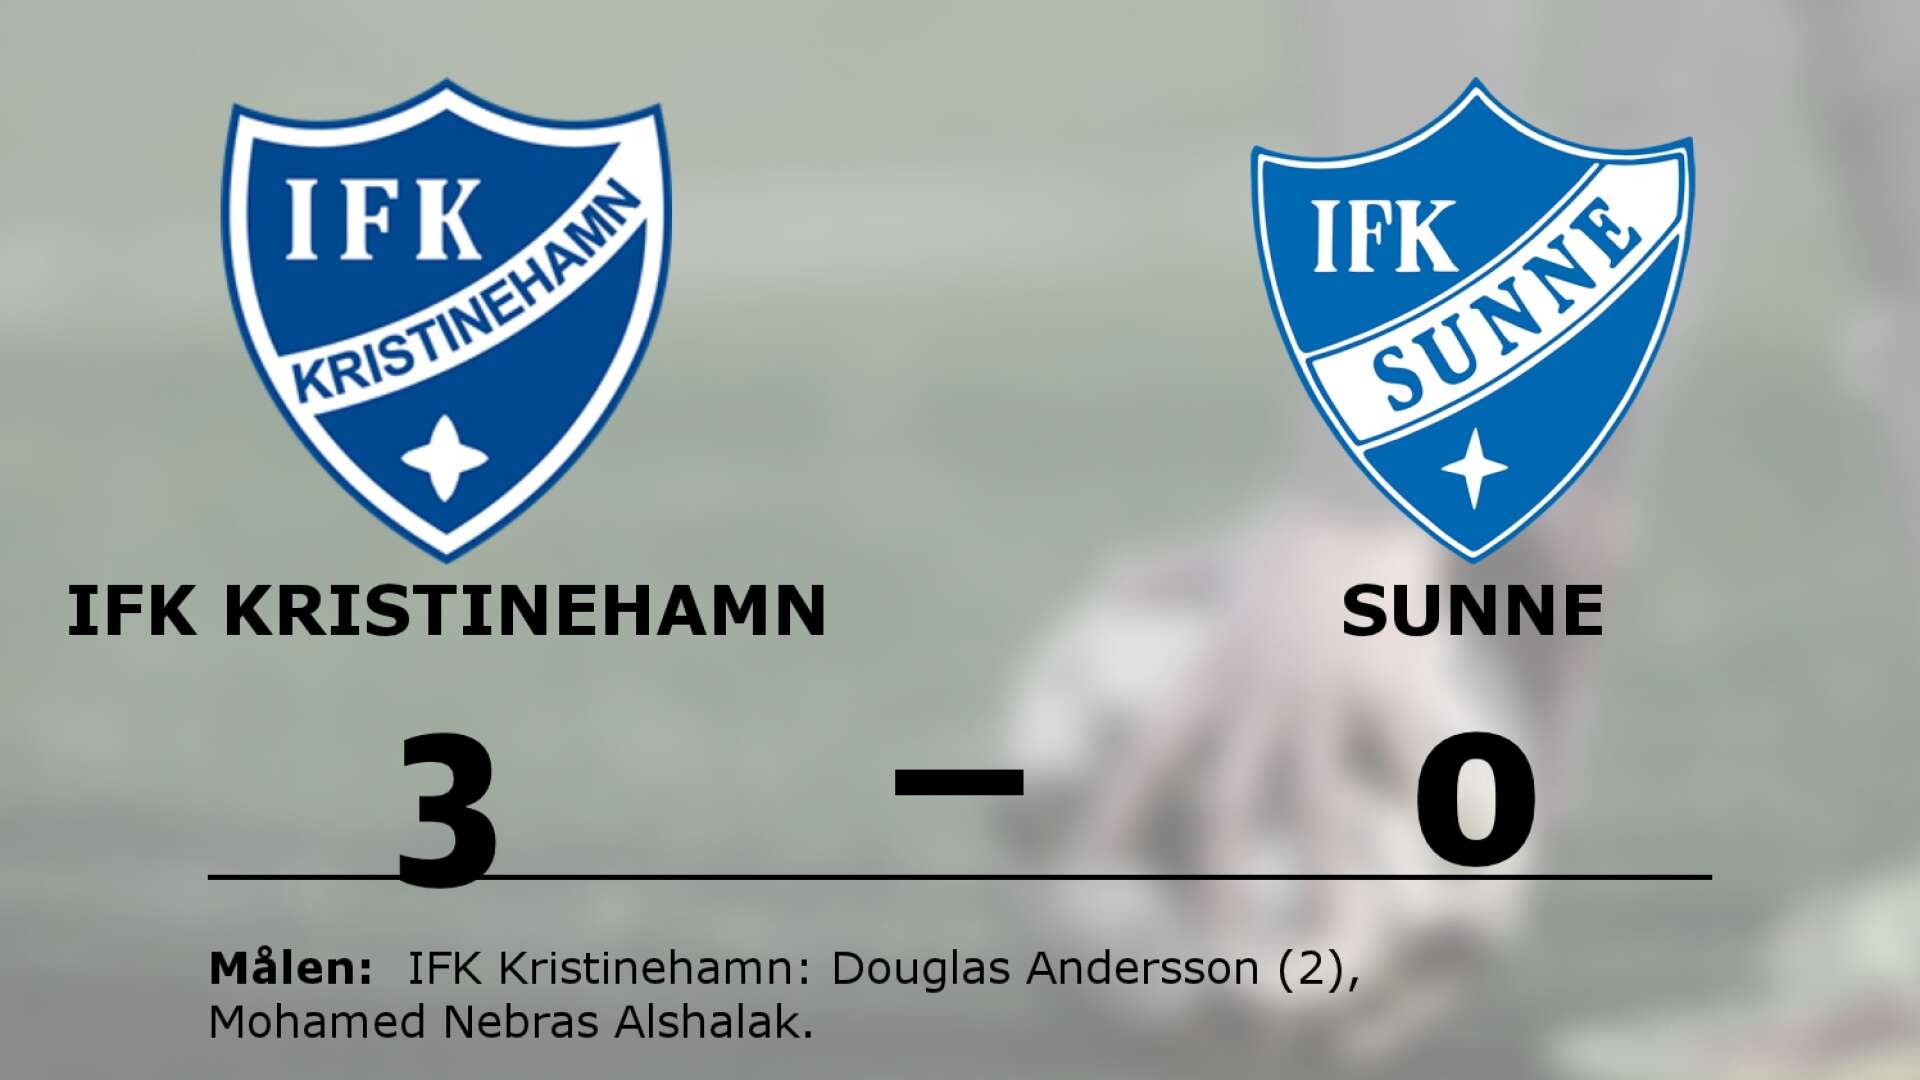 IFK Kristinehamn Fotboll vann mot IFK Sunne